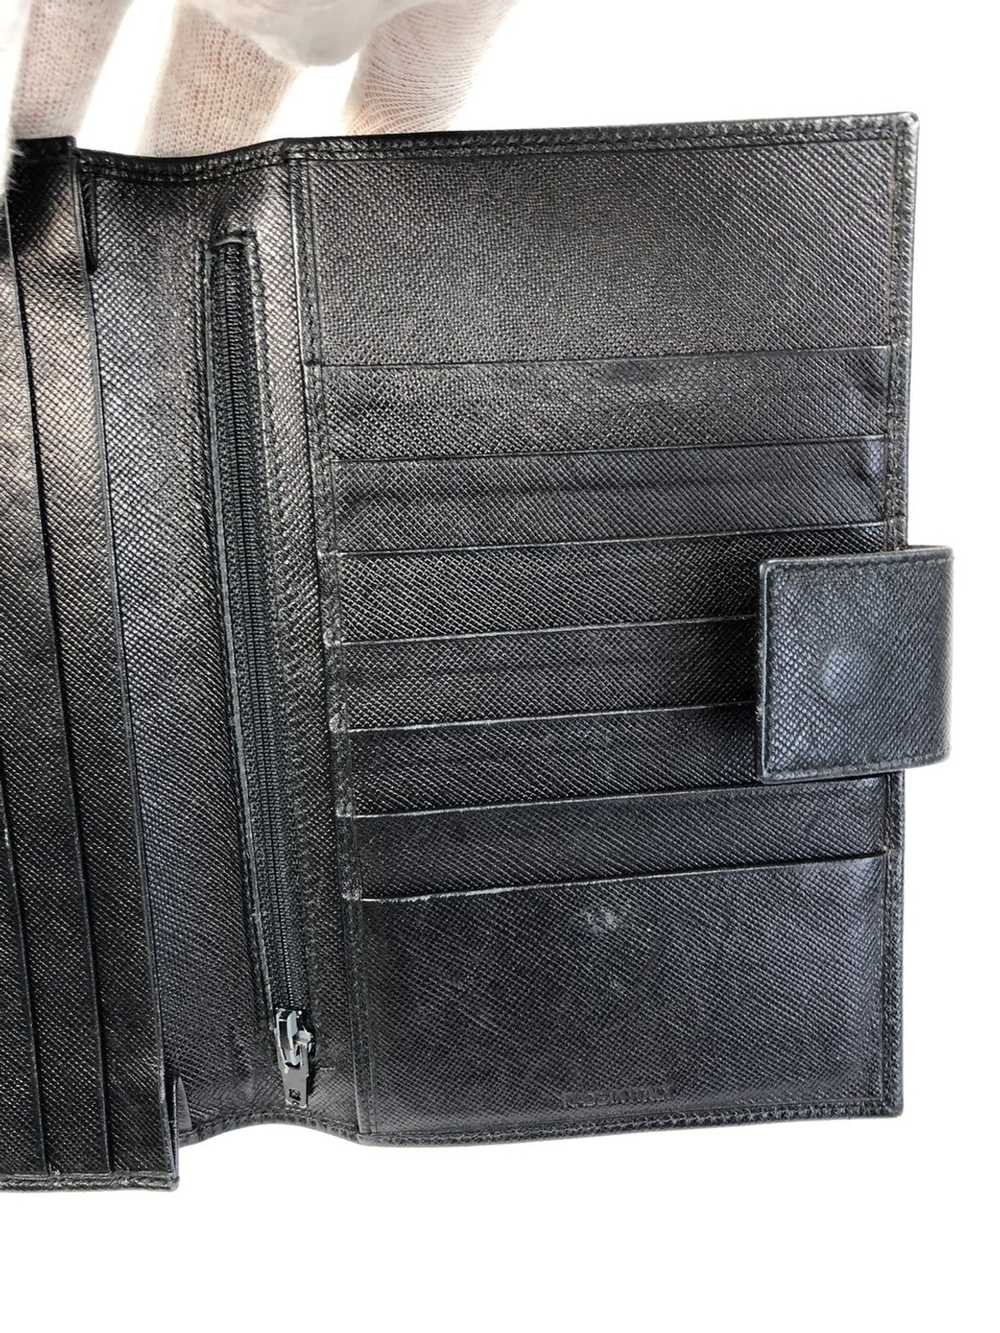 Prada Prada tessuto nero leather long wallet - image 4